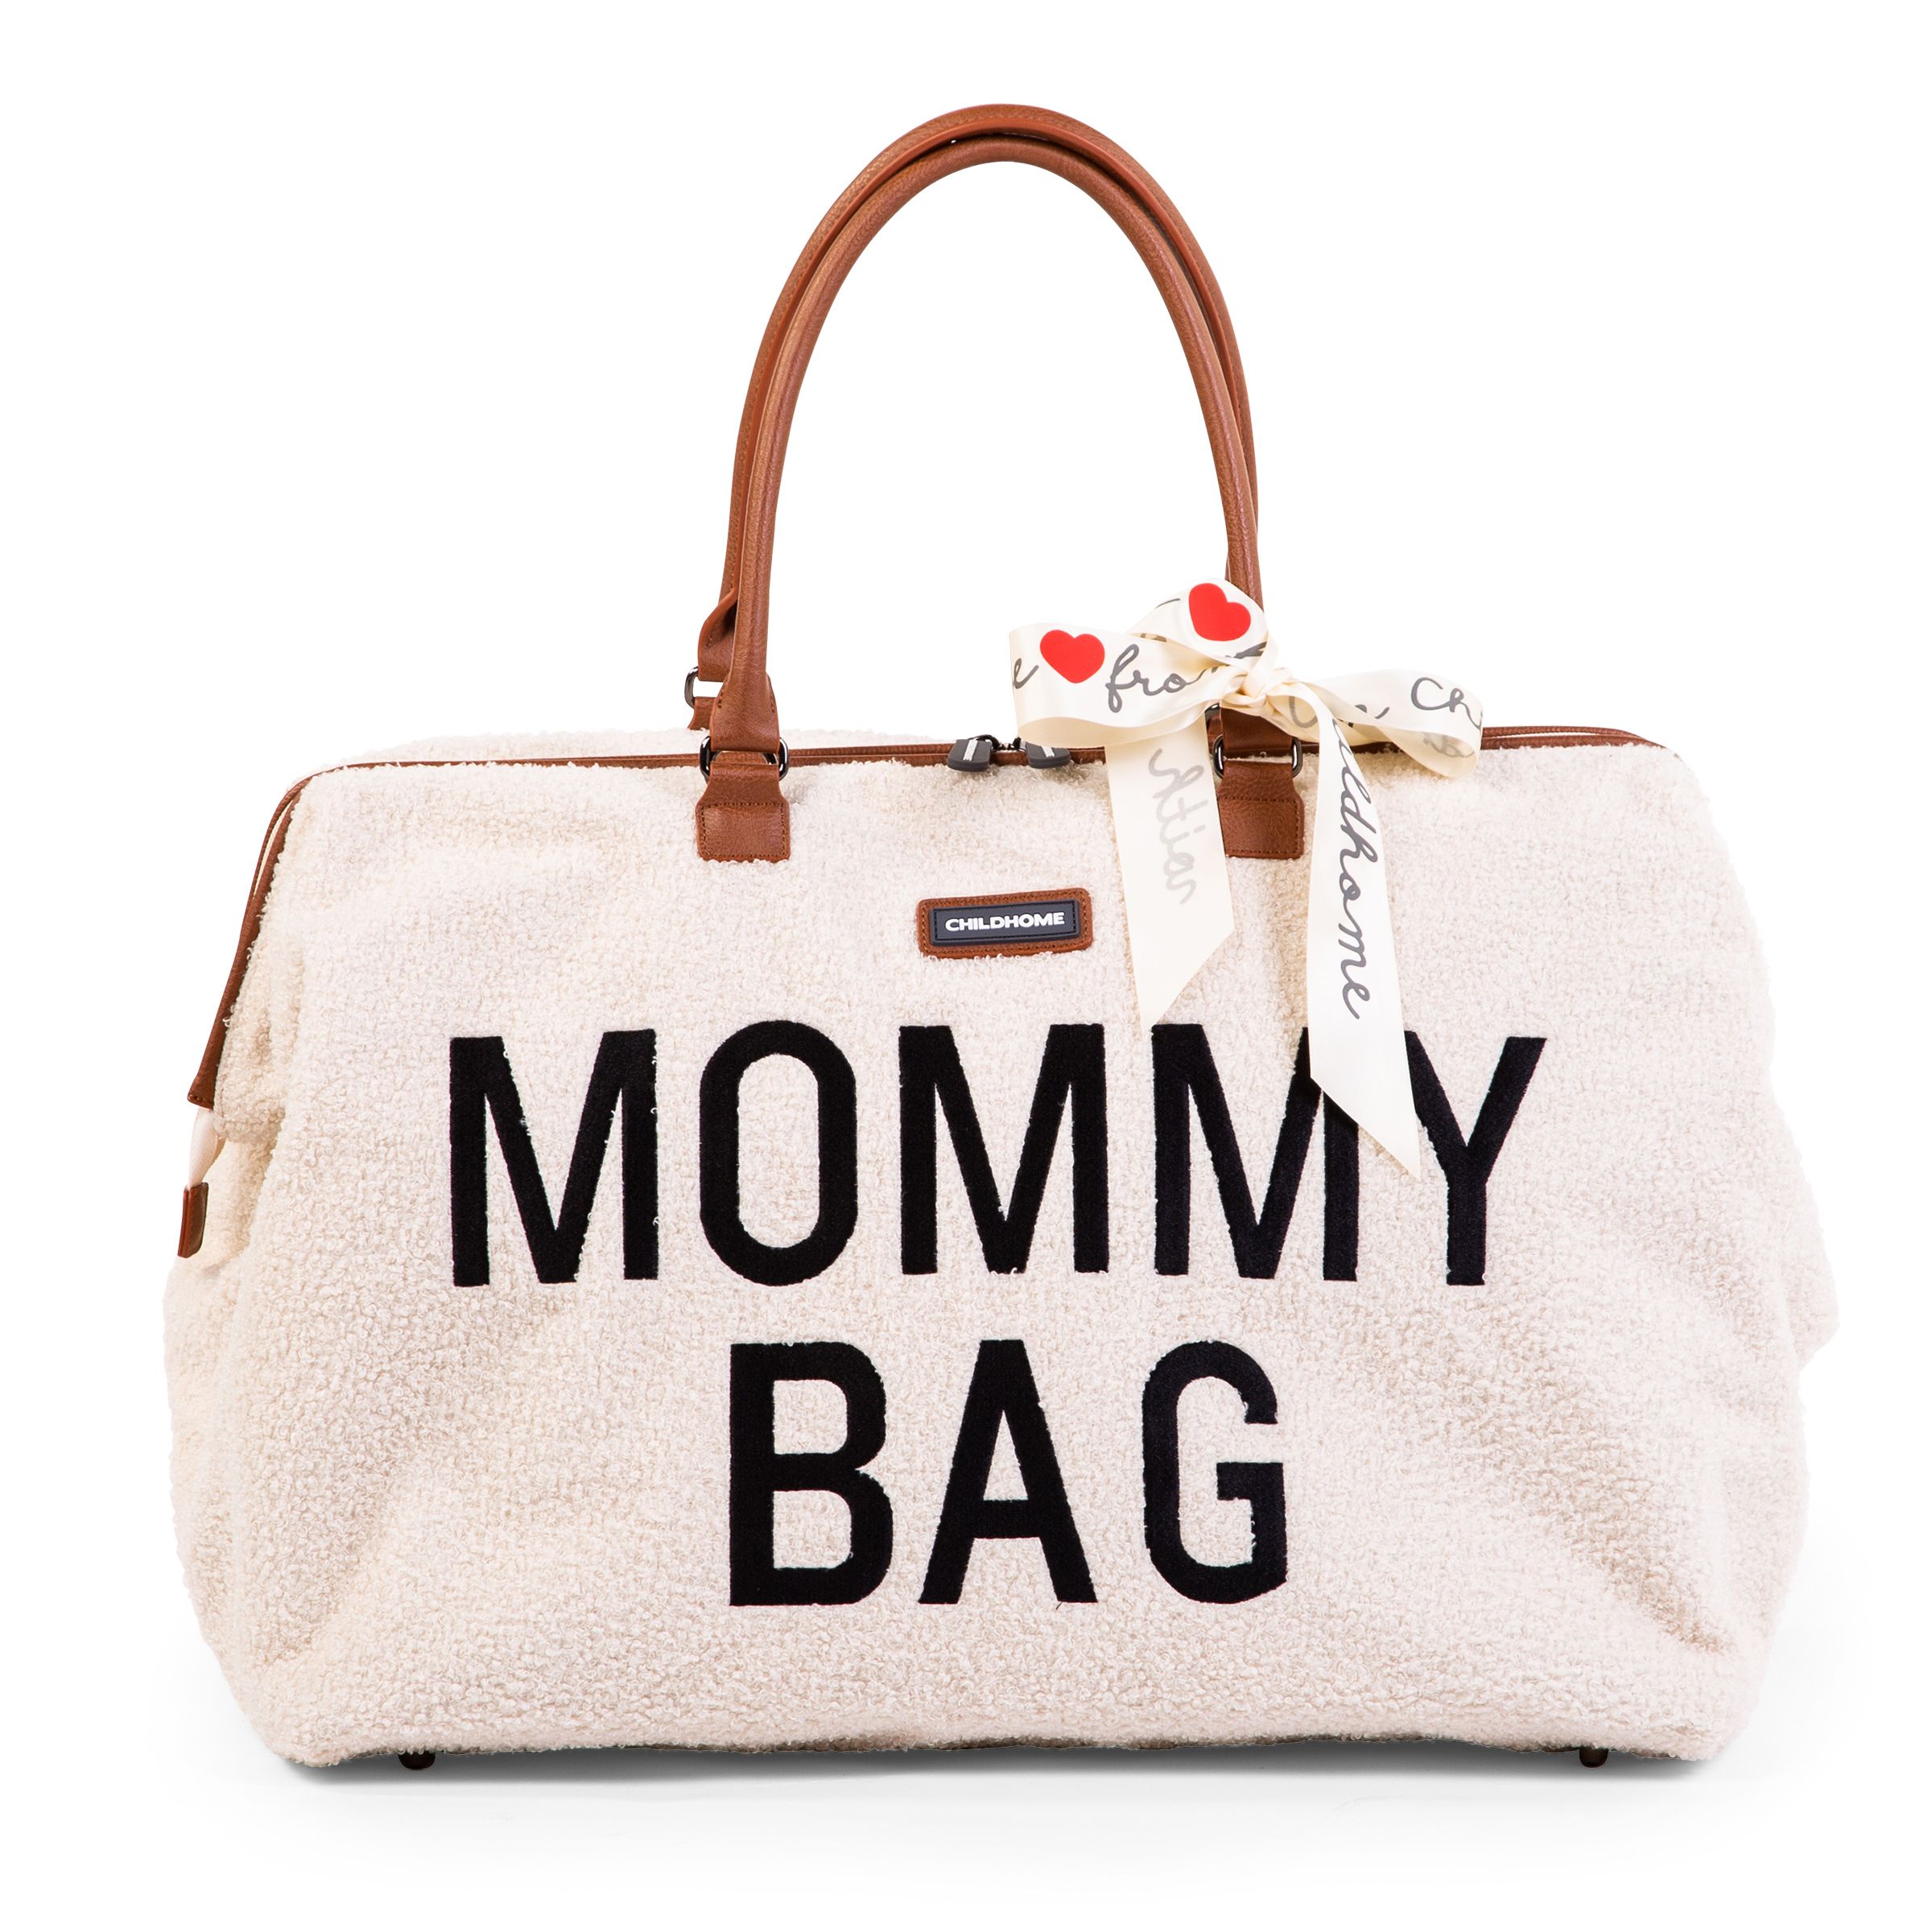 Childhome mommy bag white teddy